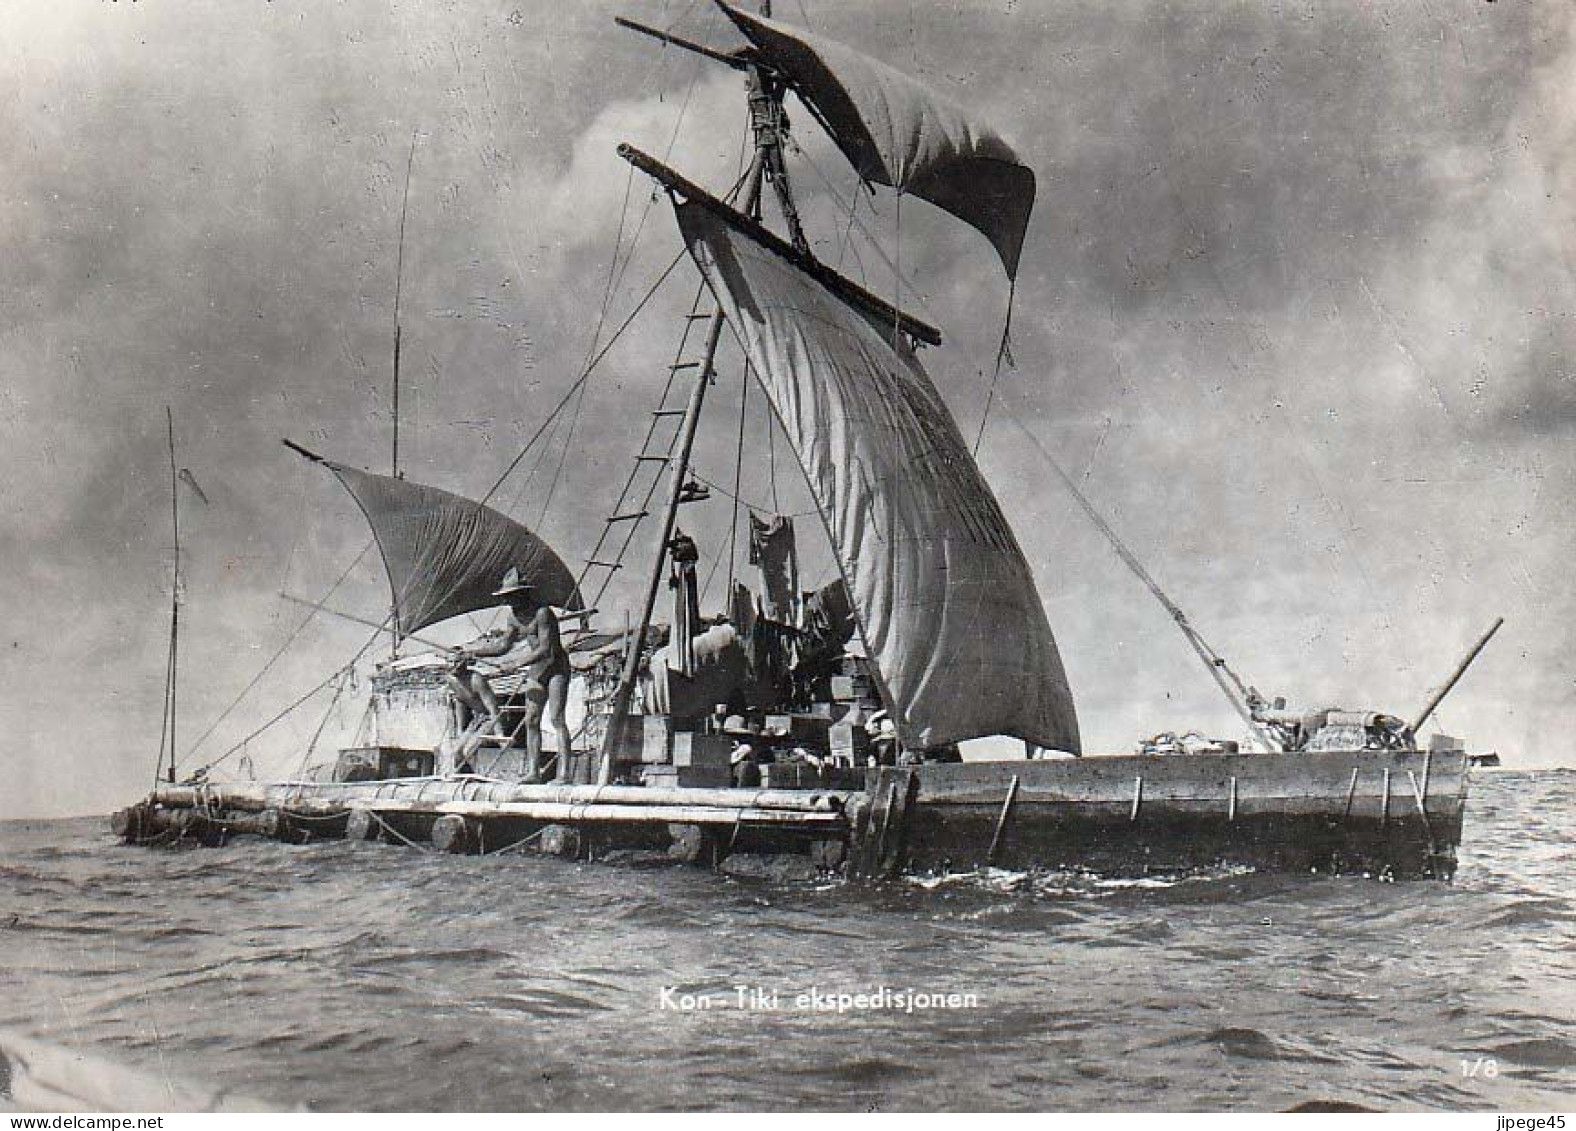 CPM - Kon-Tiki - Sailing Vessels